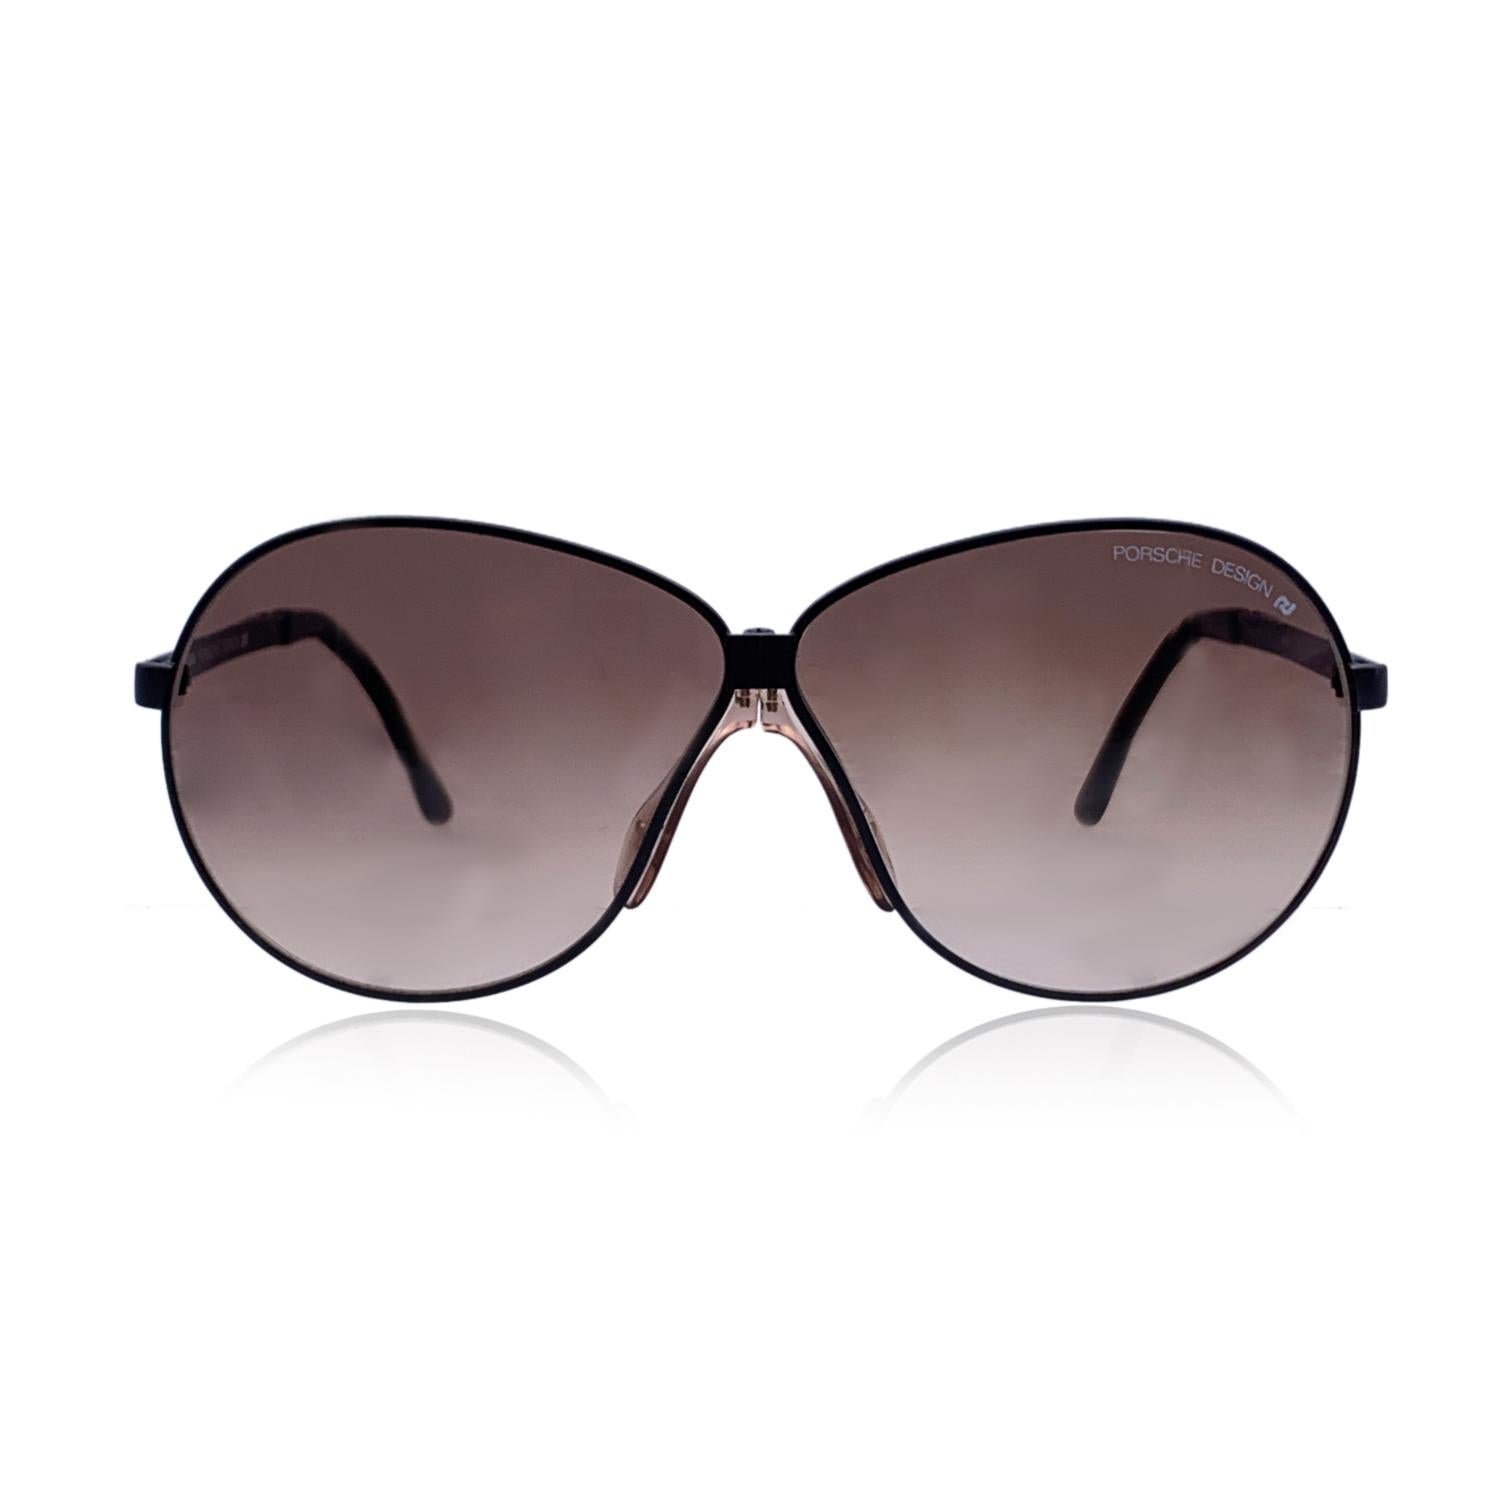 Vintage foldable sunglasses by Porsche Design mod. 5626. Black metal frame. Oversize design. Gradient brown lenses. Made in Austria

Details

MATERIAL: Metal

COLOR: Black

MODEL: Foldable 5626

GENDER: Unisex Adults

COUNTRY OF MANUFACTURE: